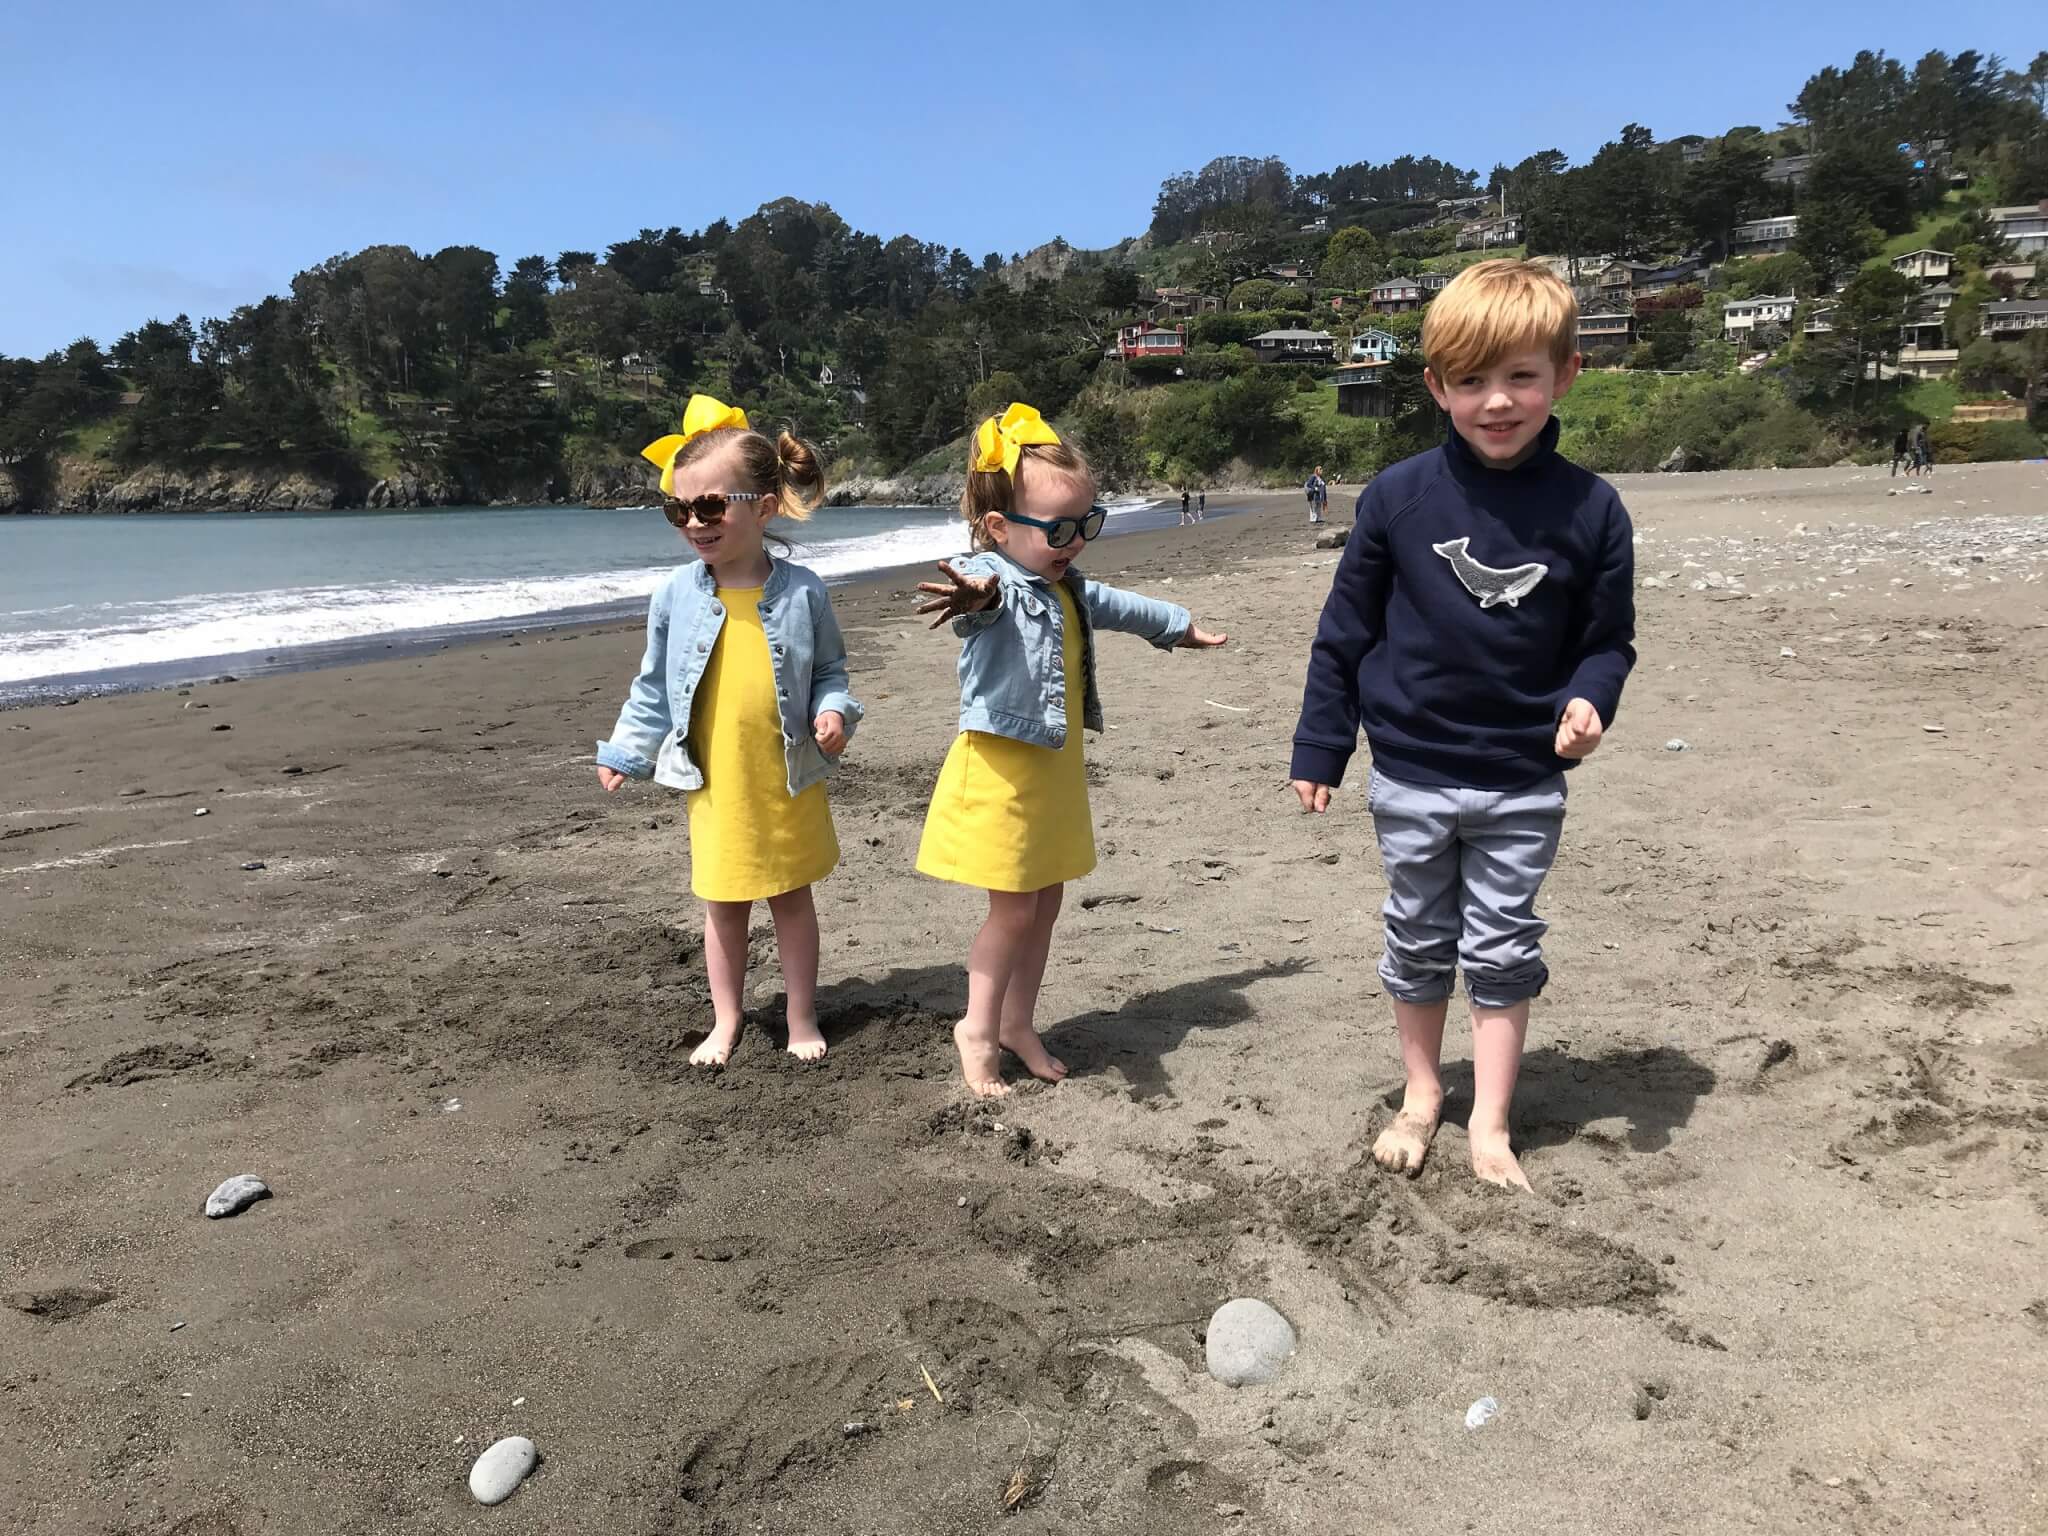 From left to right, Sibby-Annie Duttweiler, 4, Woods Duttweiler, 2, and Hunter Duttweiler, 5, enjoy a 2019 trip to the beach in San Francisco, California. Courtesy photo.